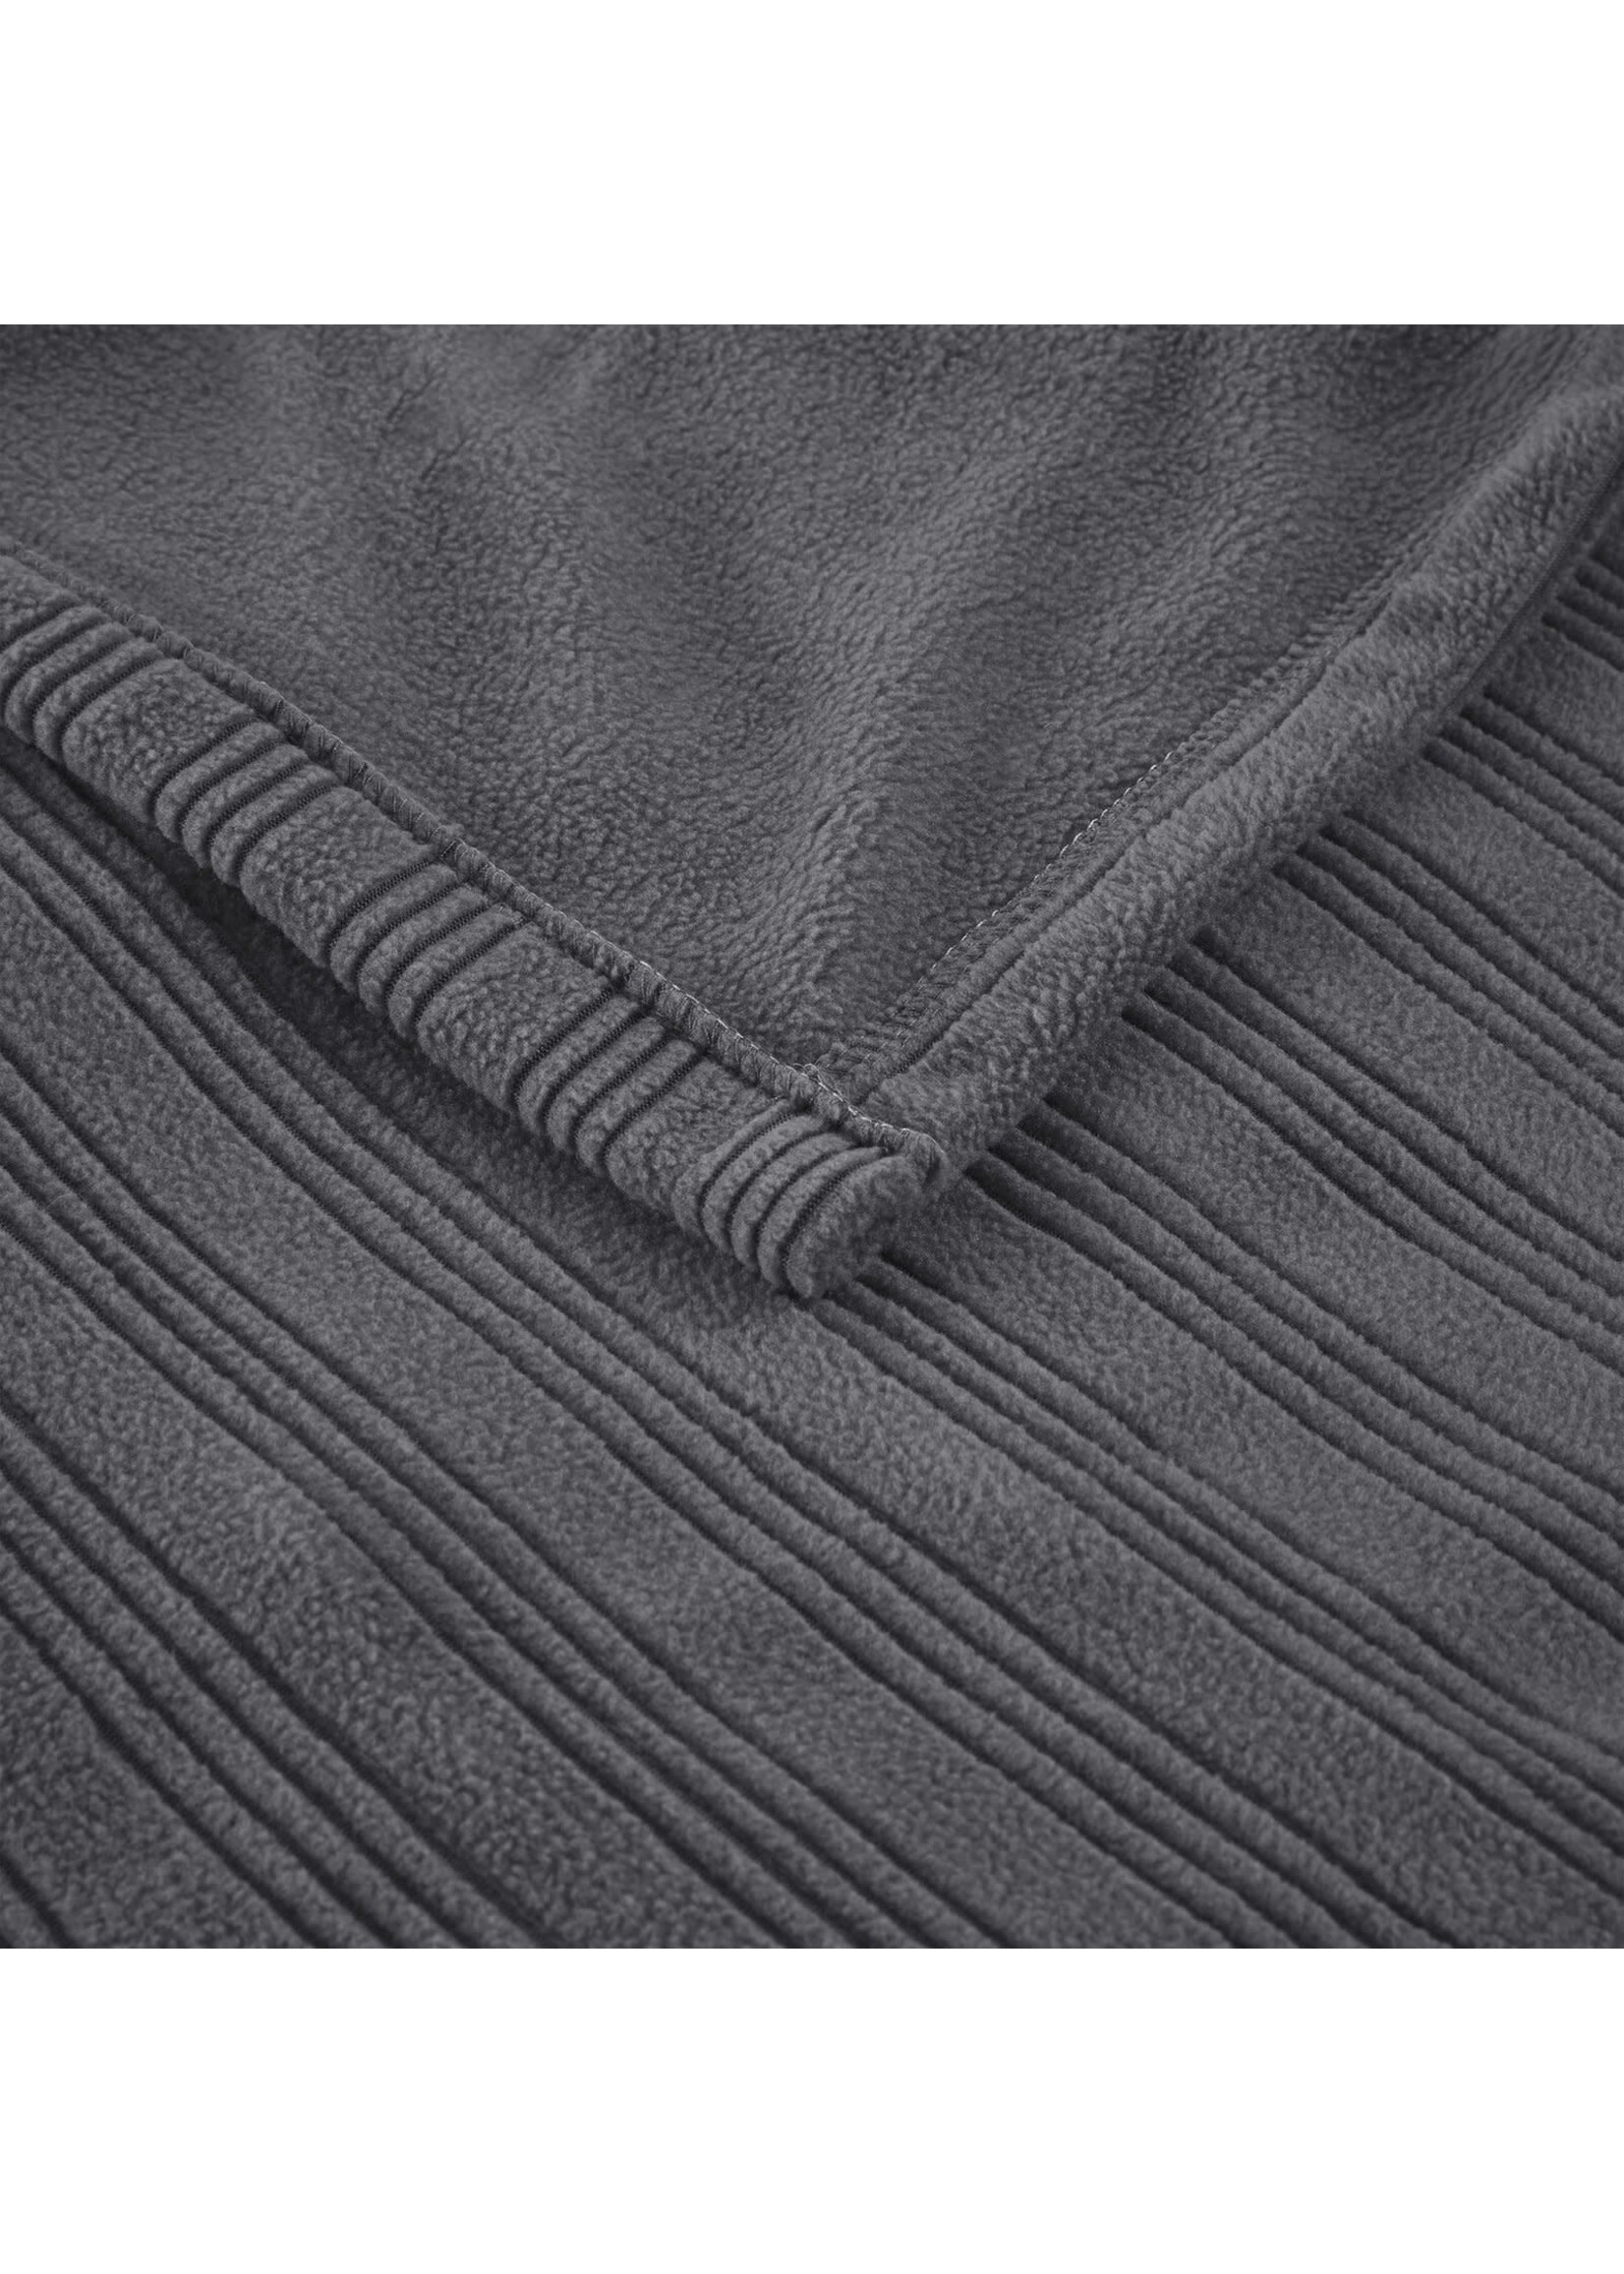 *King - Ribbed Micro Fleece Heated Blanket - Final Sale